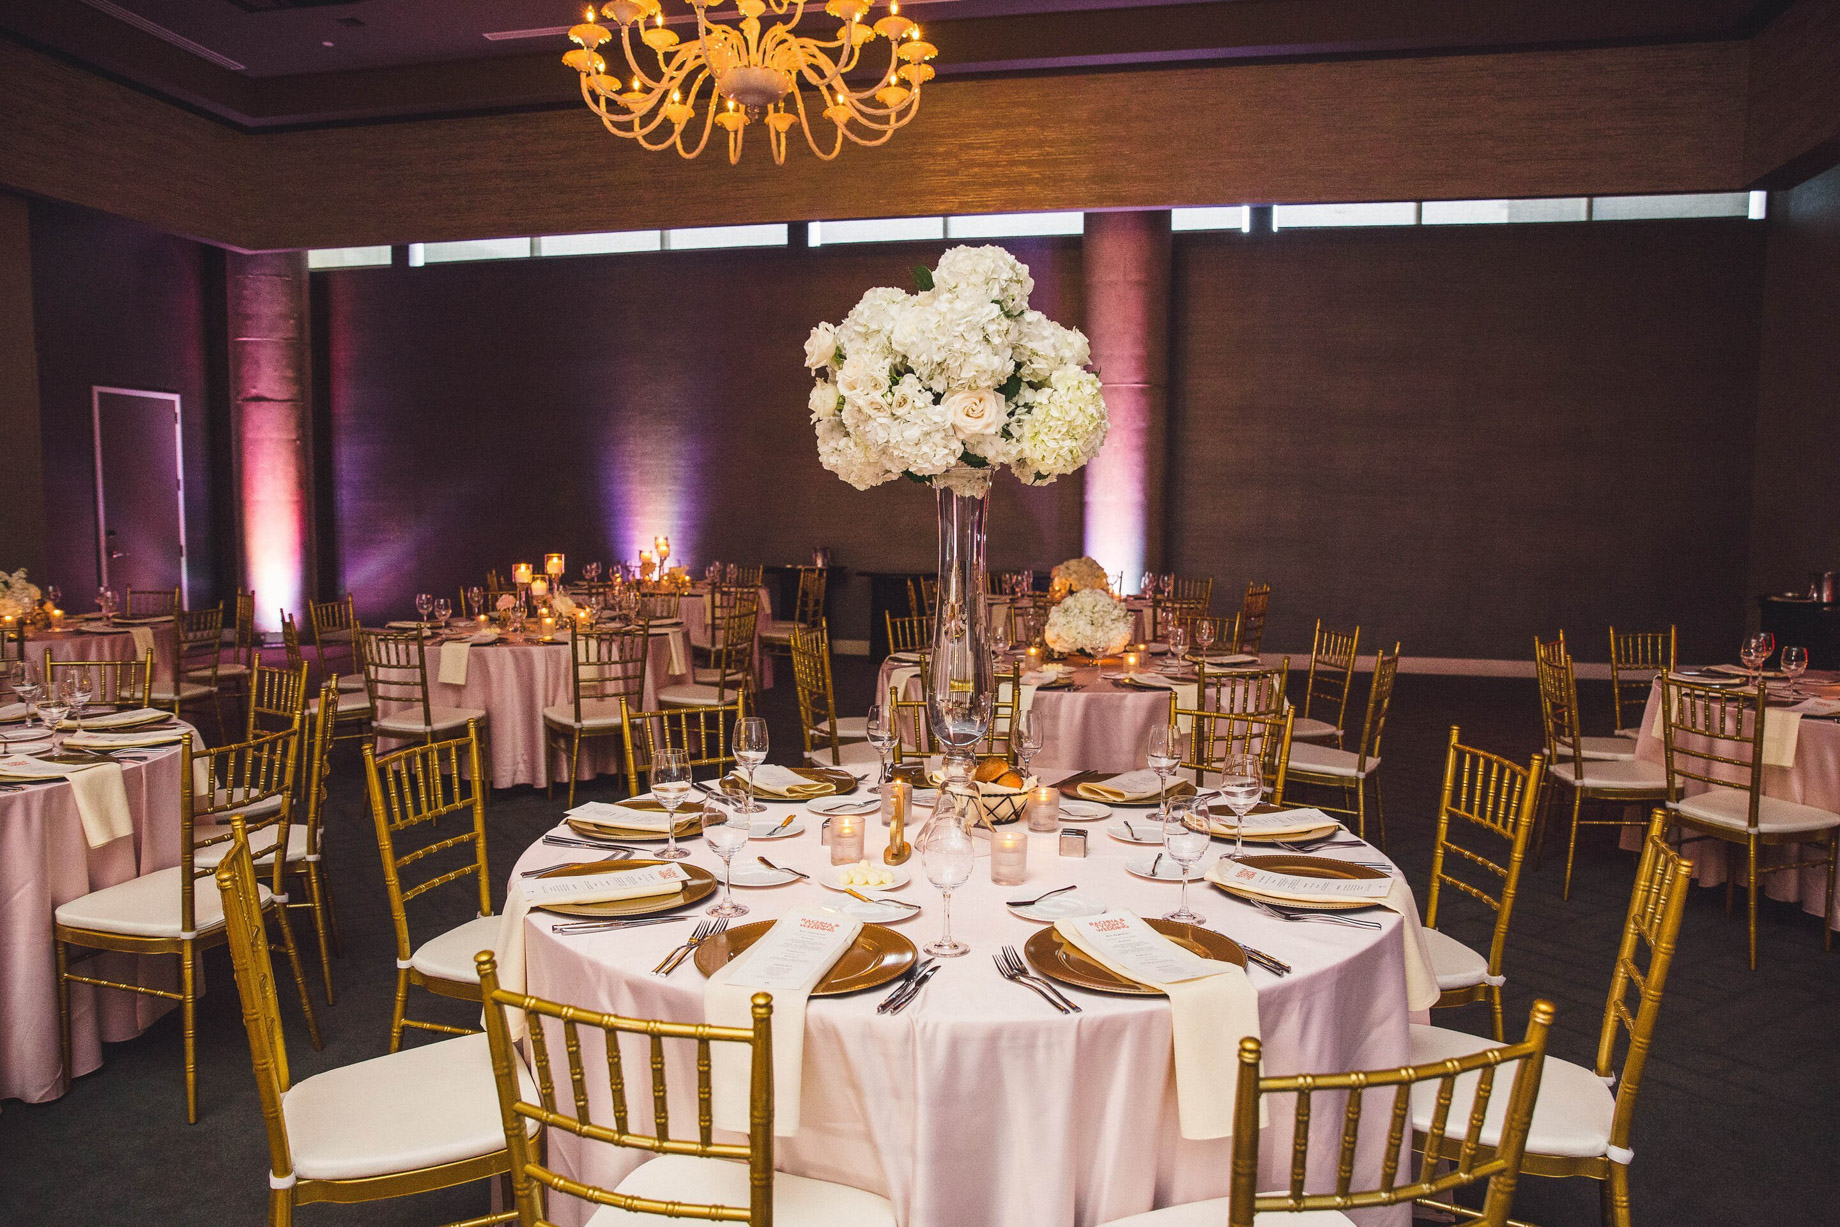 W Austin Hotel – Austin, TX, USA – Great Room Wedding Reception Setup